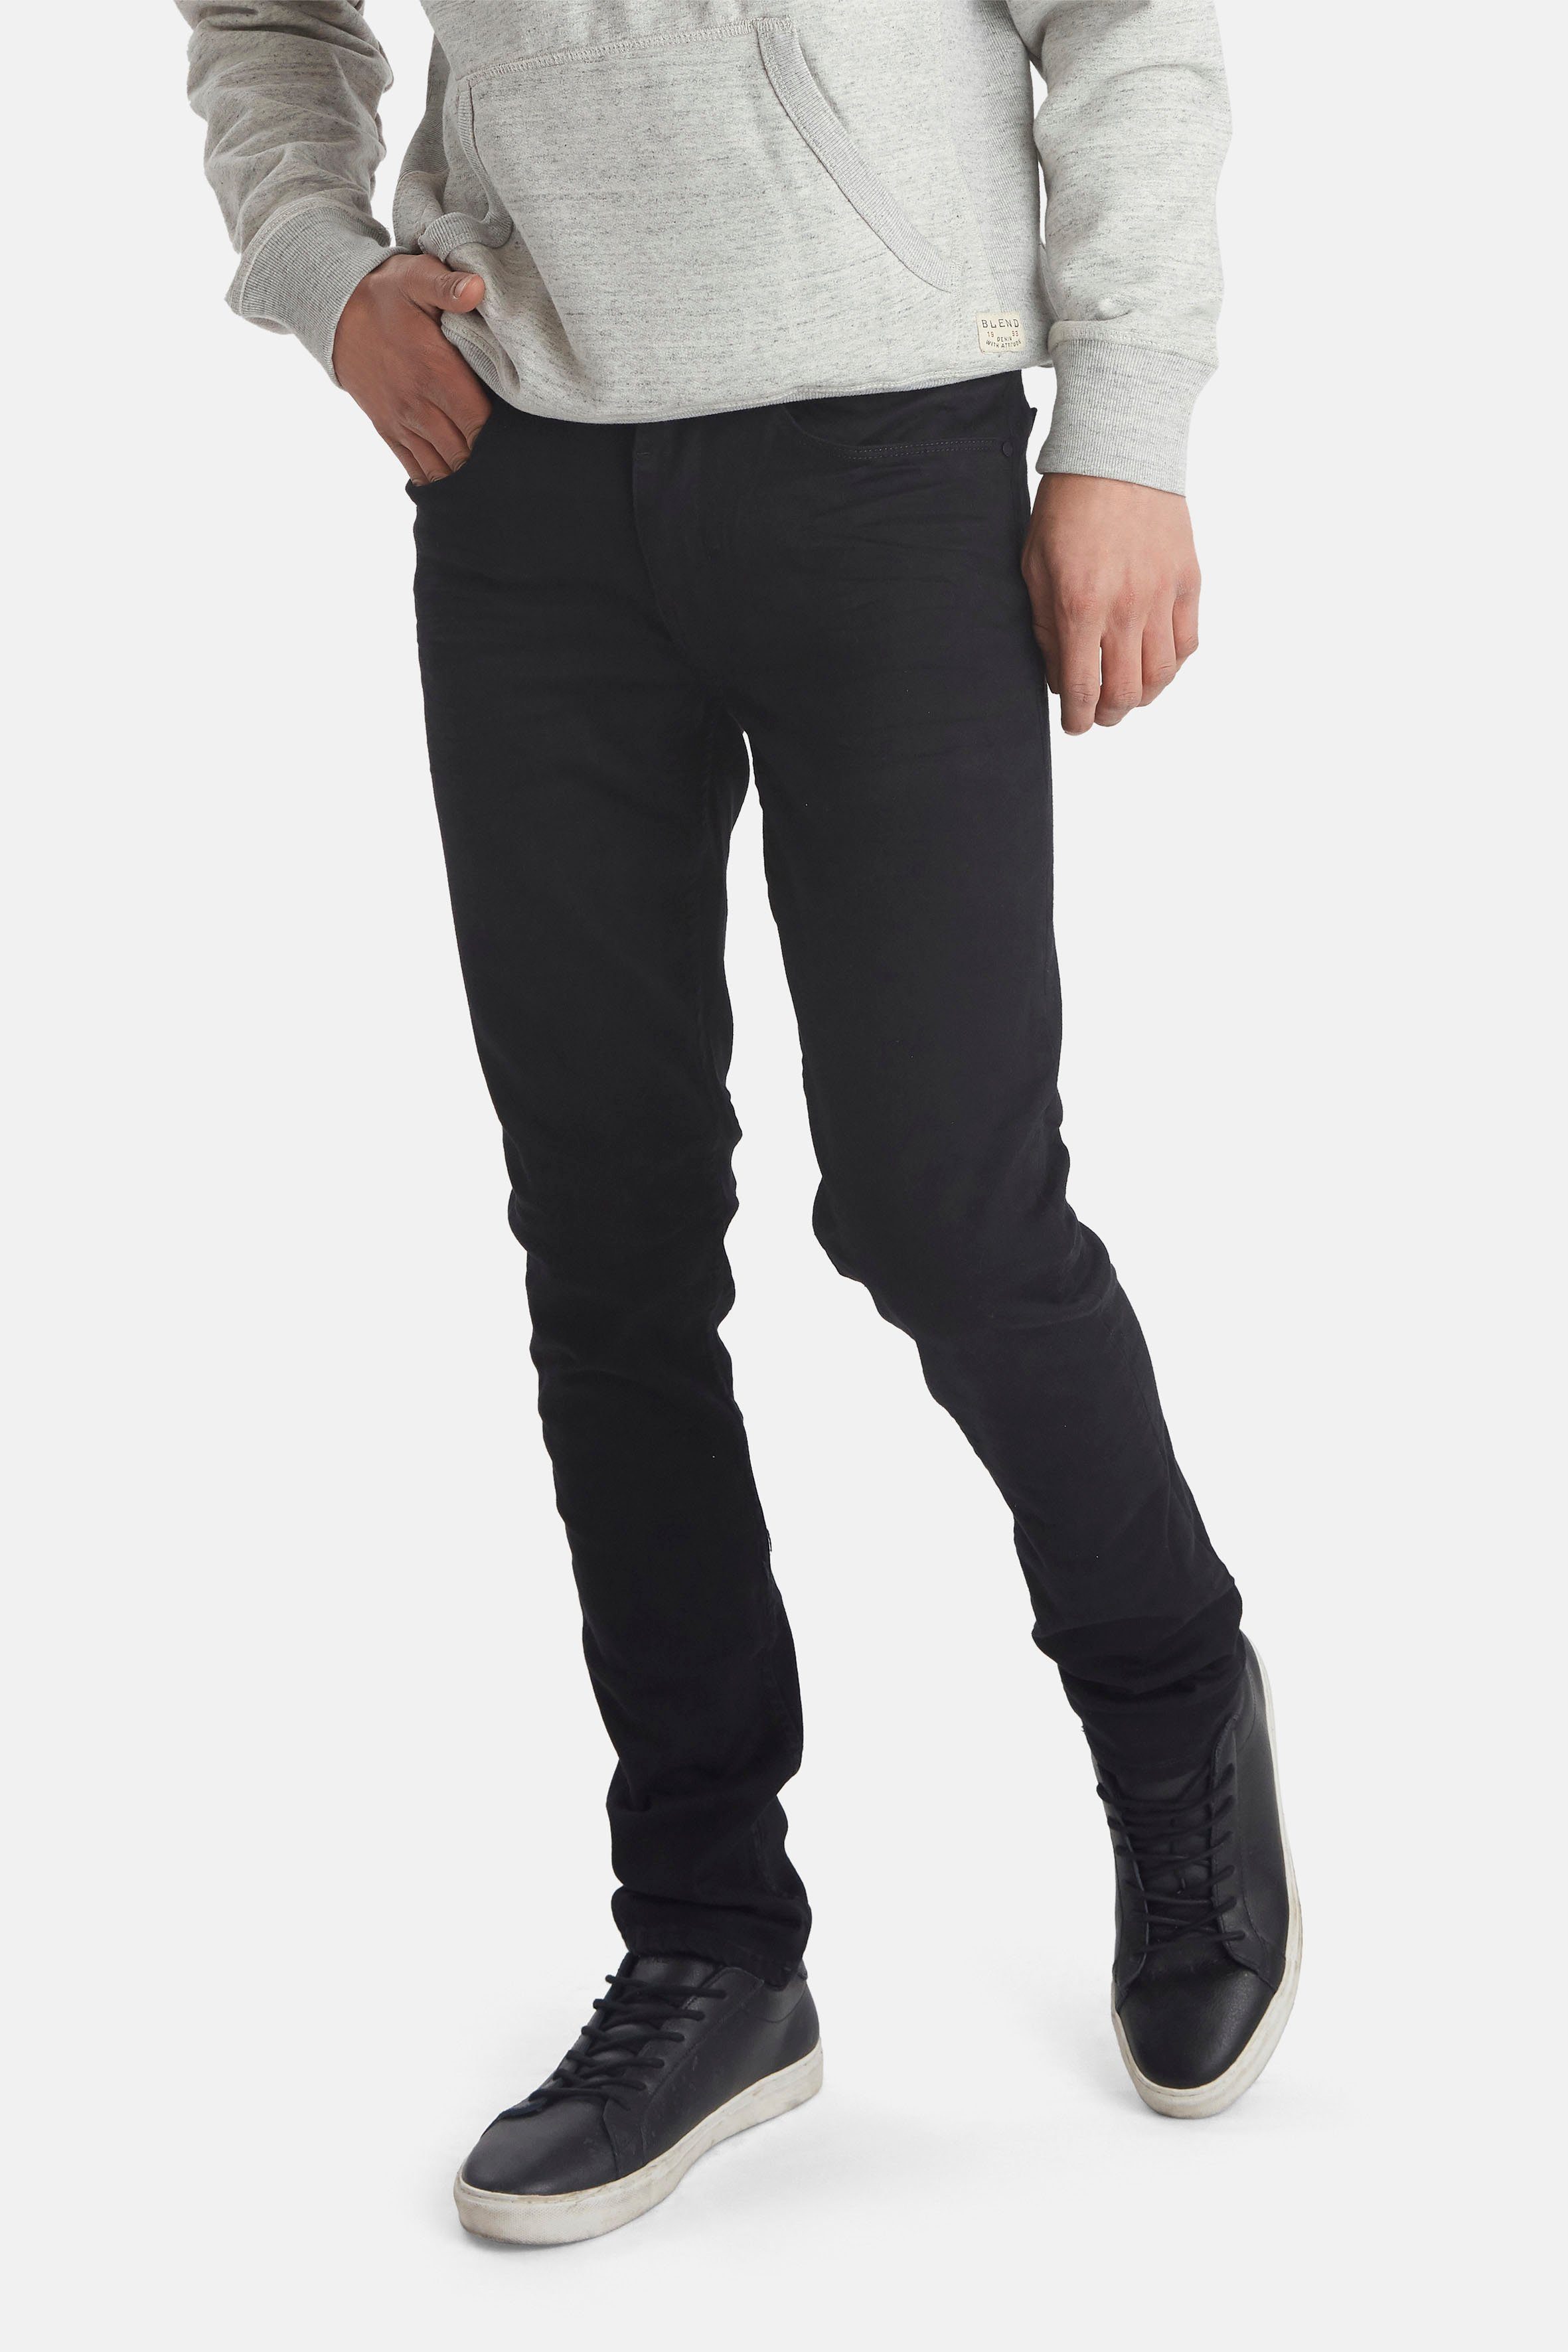 Multiflex Jet Blend black Slim-fit-Jeans